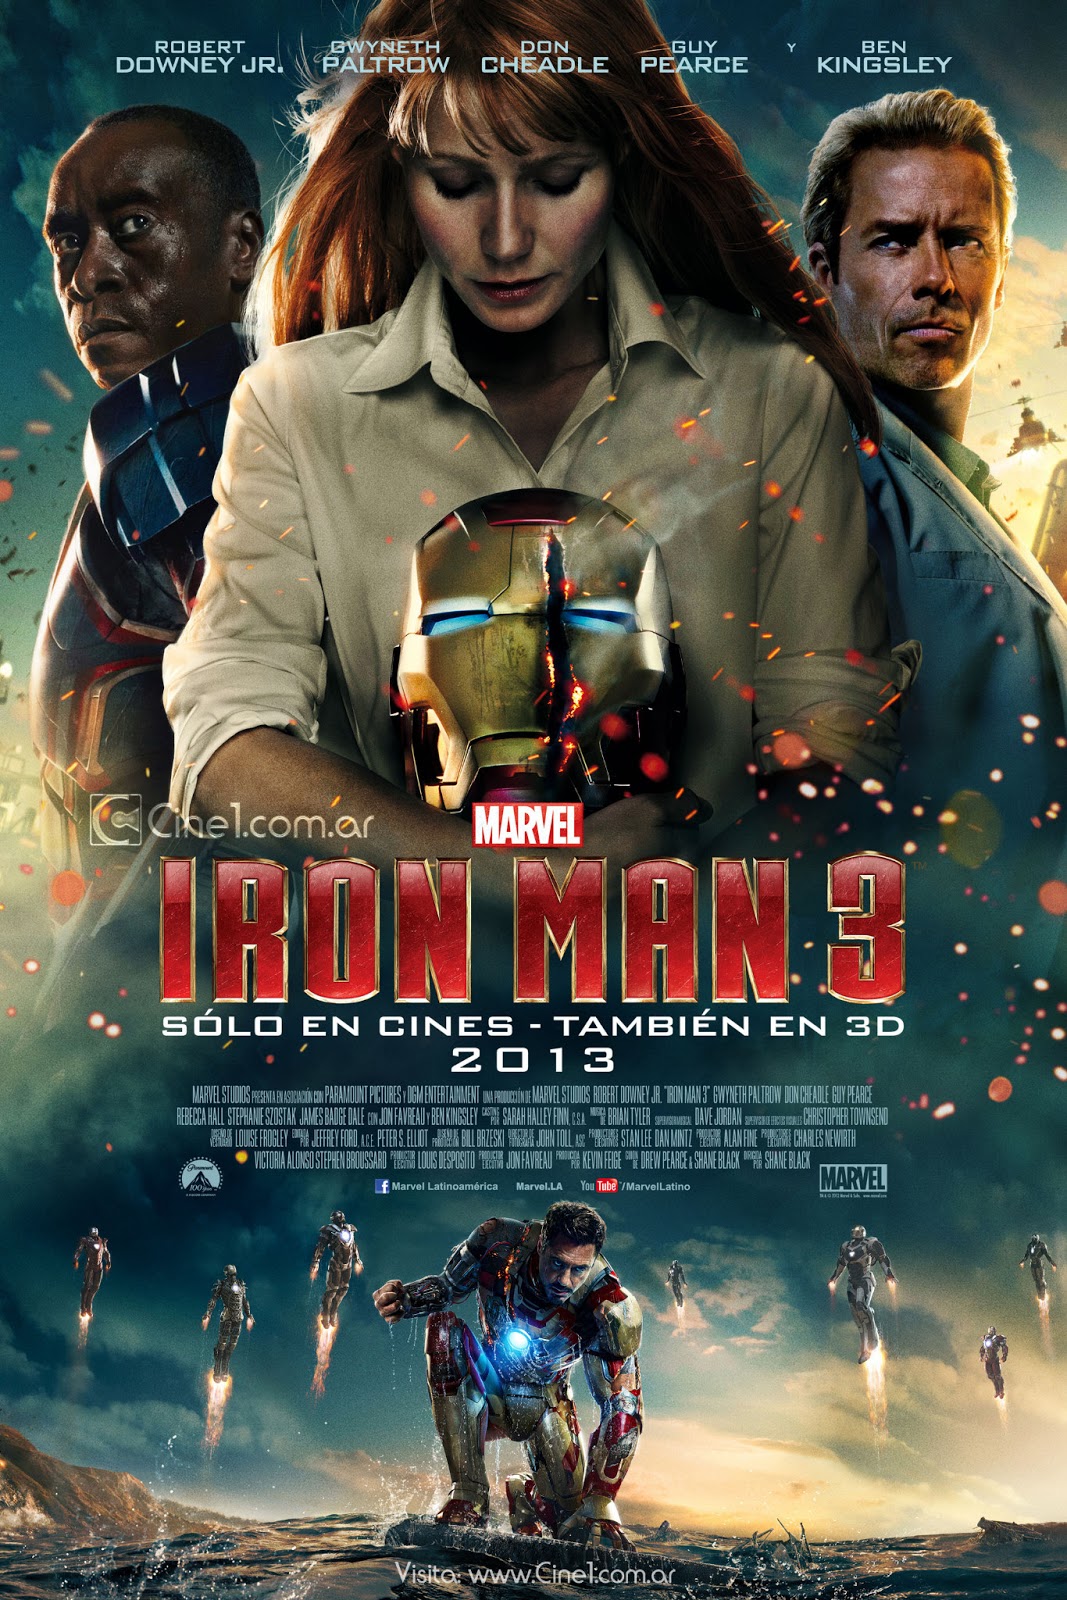 Iron man 3 dual audio 1080p system